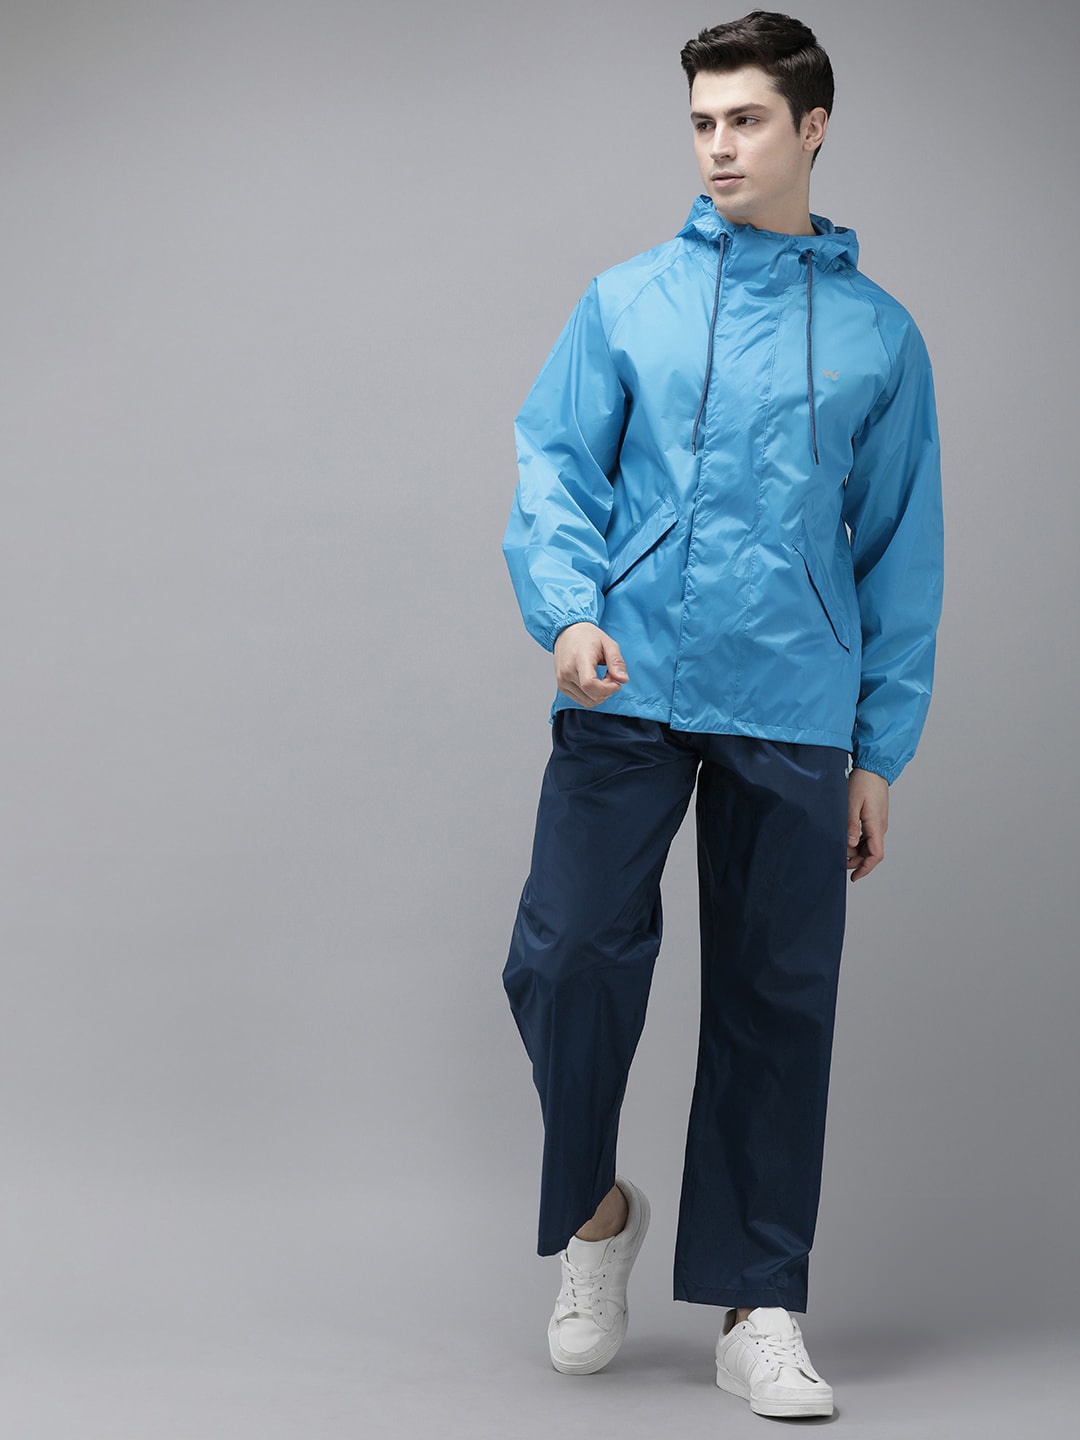 

Wildcraft Men Solid HYPADRY Waterproof Lightweight Rain Suit, Blue